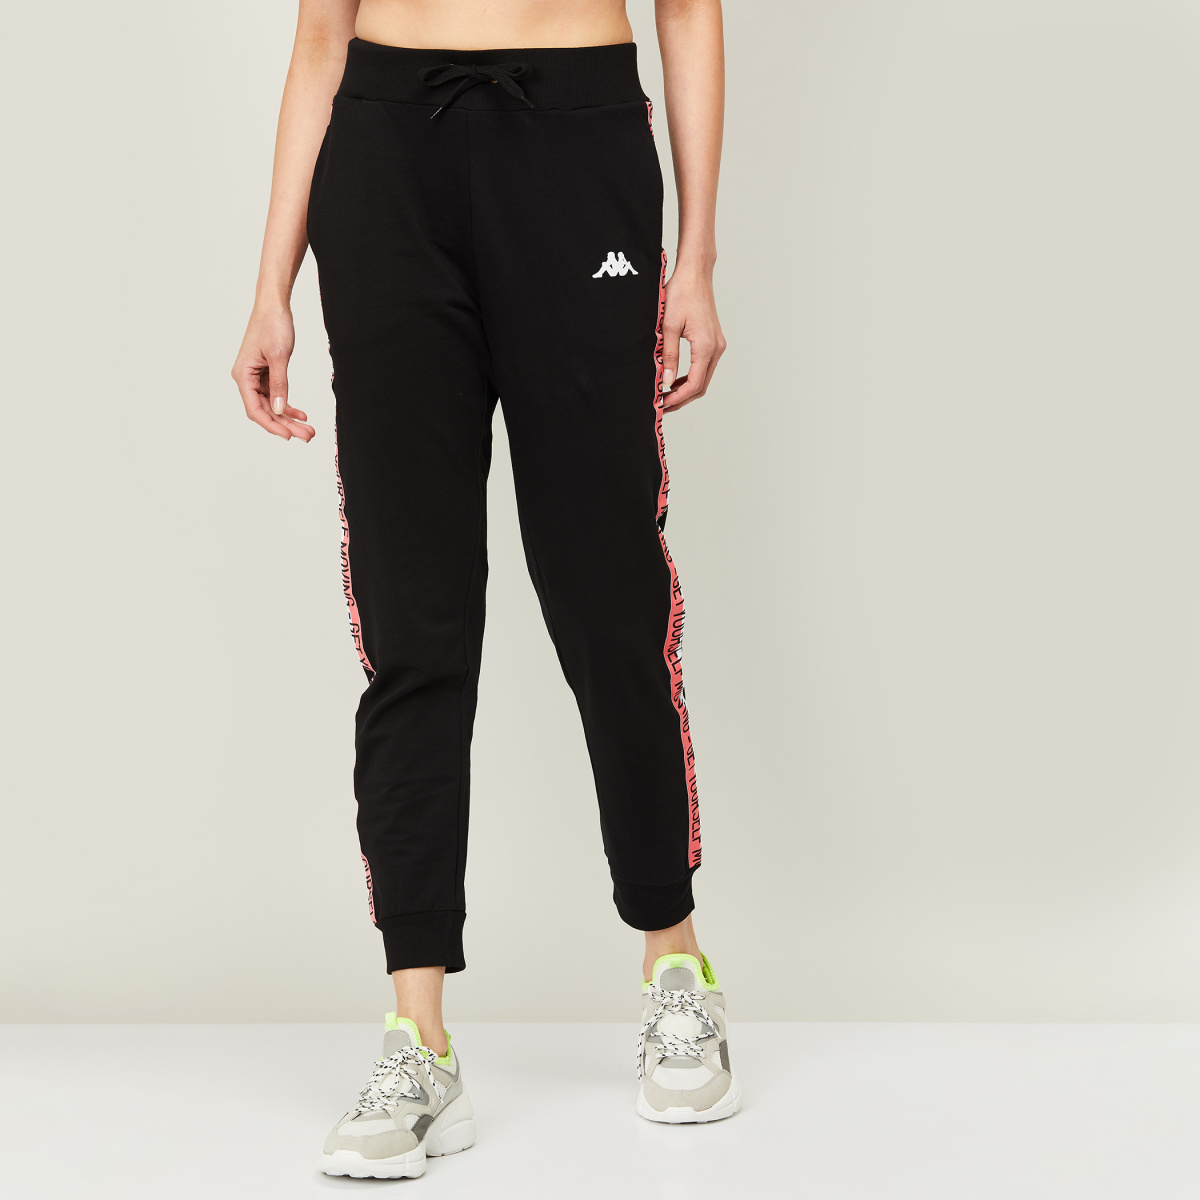 Kappa | Pants & Jumpsuits | Kappa Black Track Pants Joggers Size Xs |  Poshmark